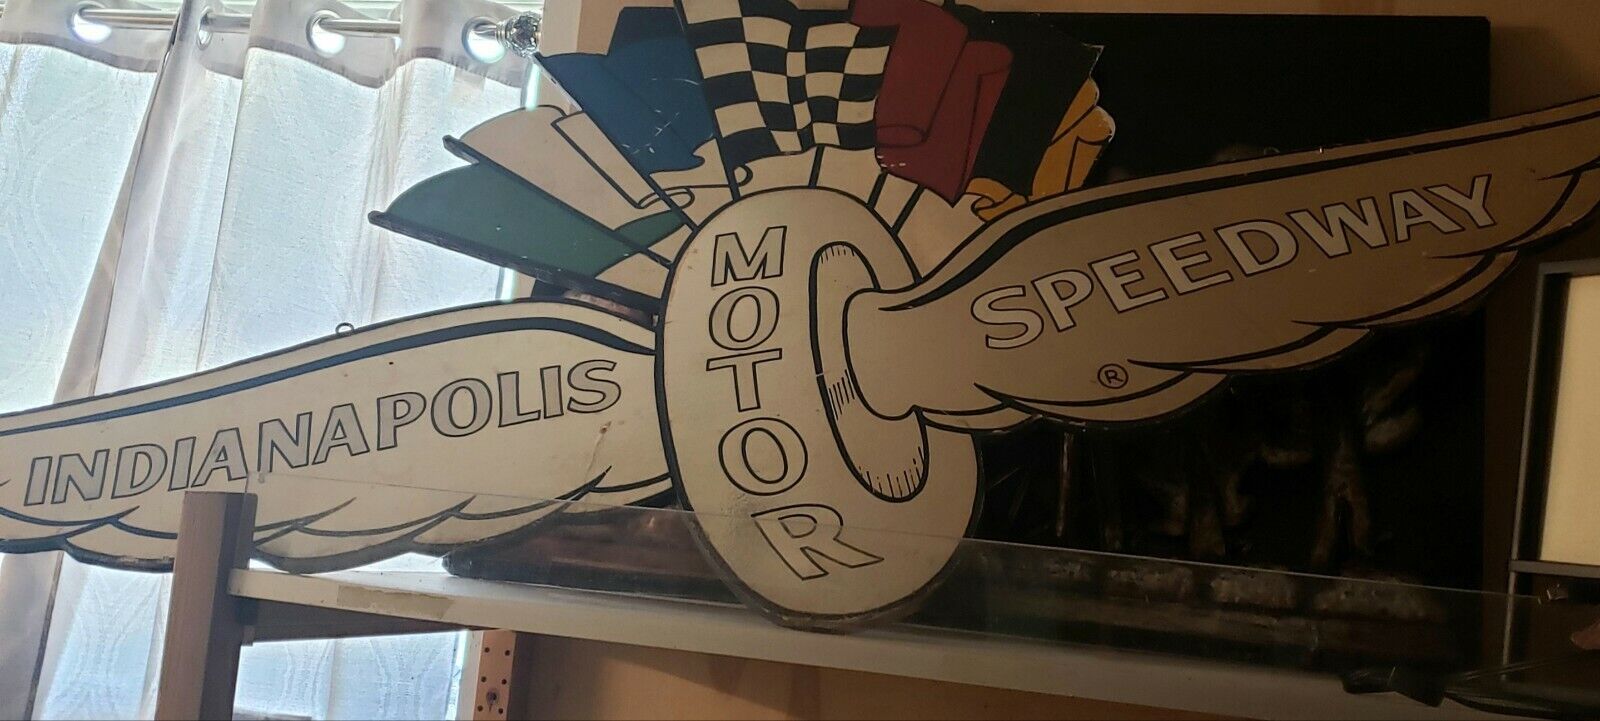 Indy 500 Sign, Vintage, Race Fans